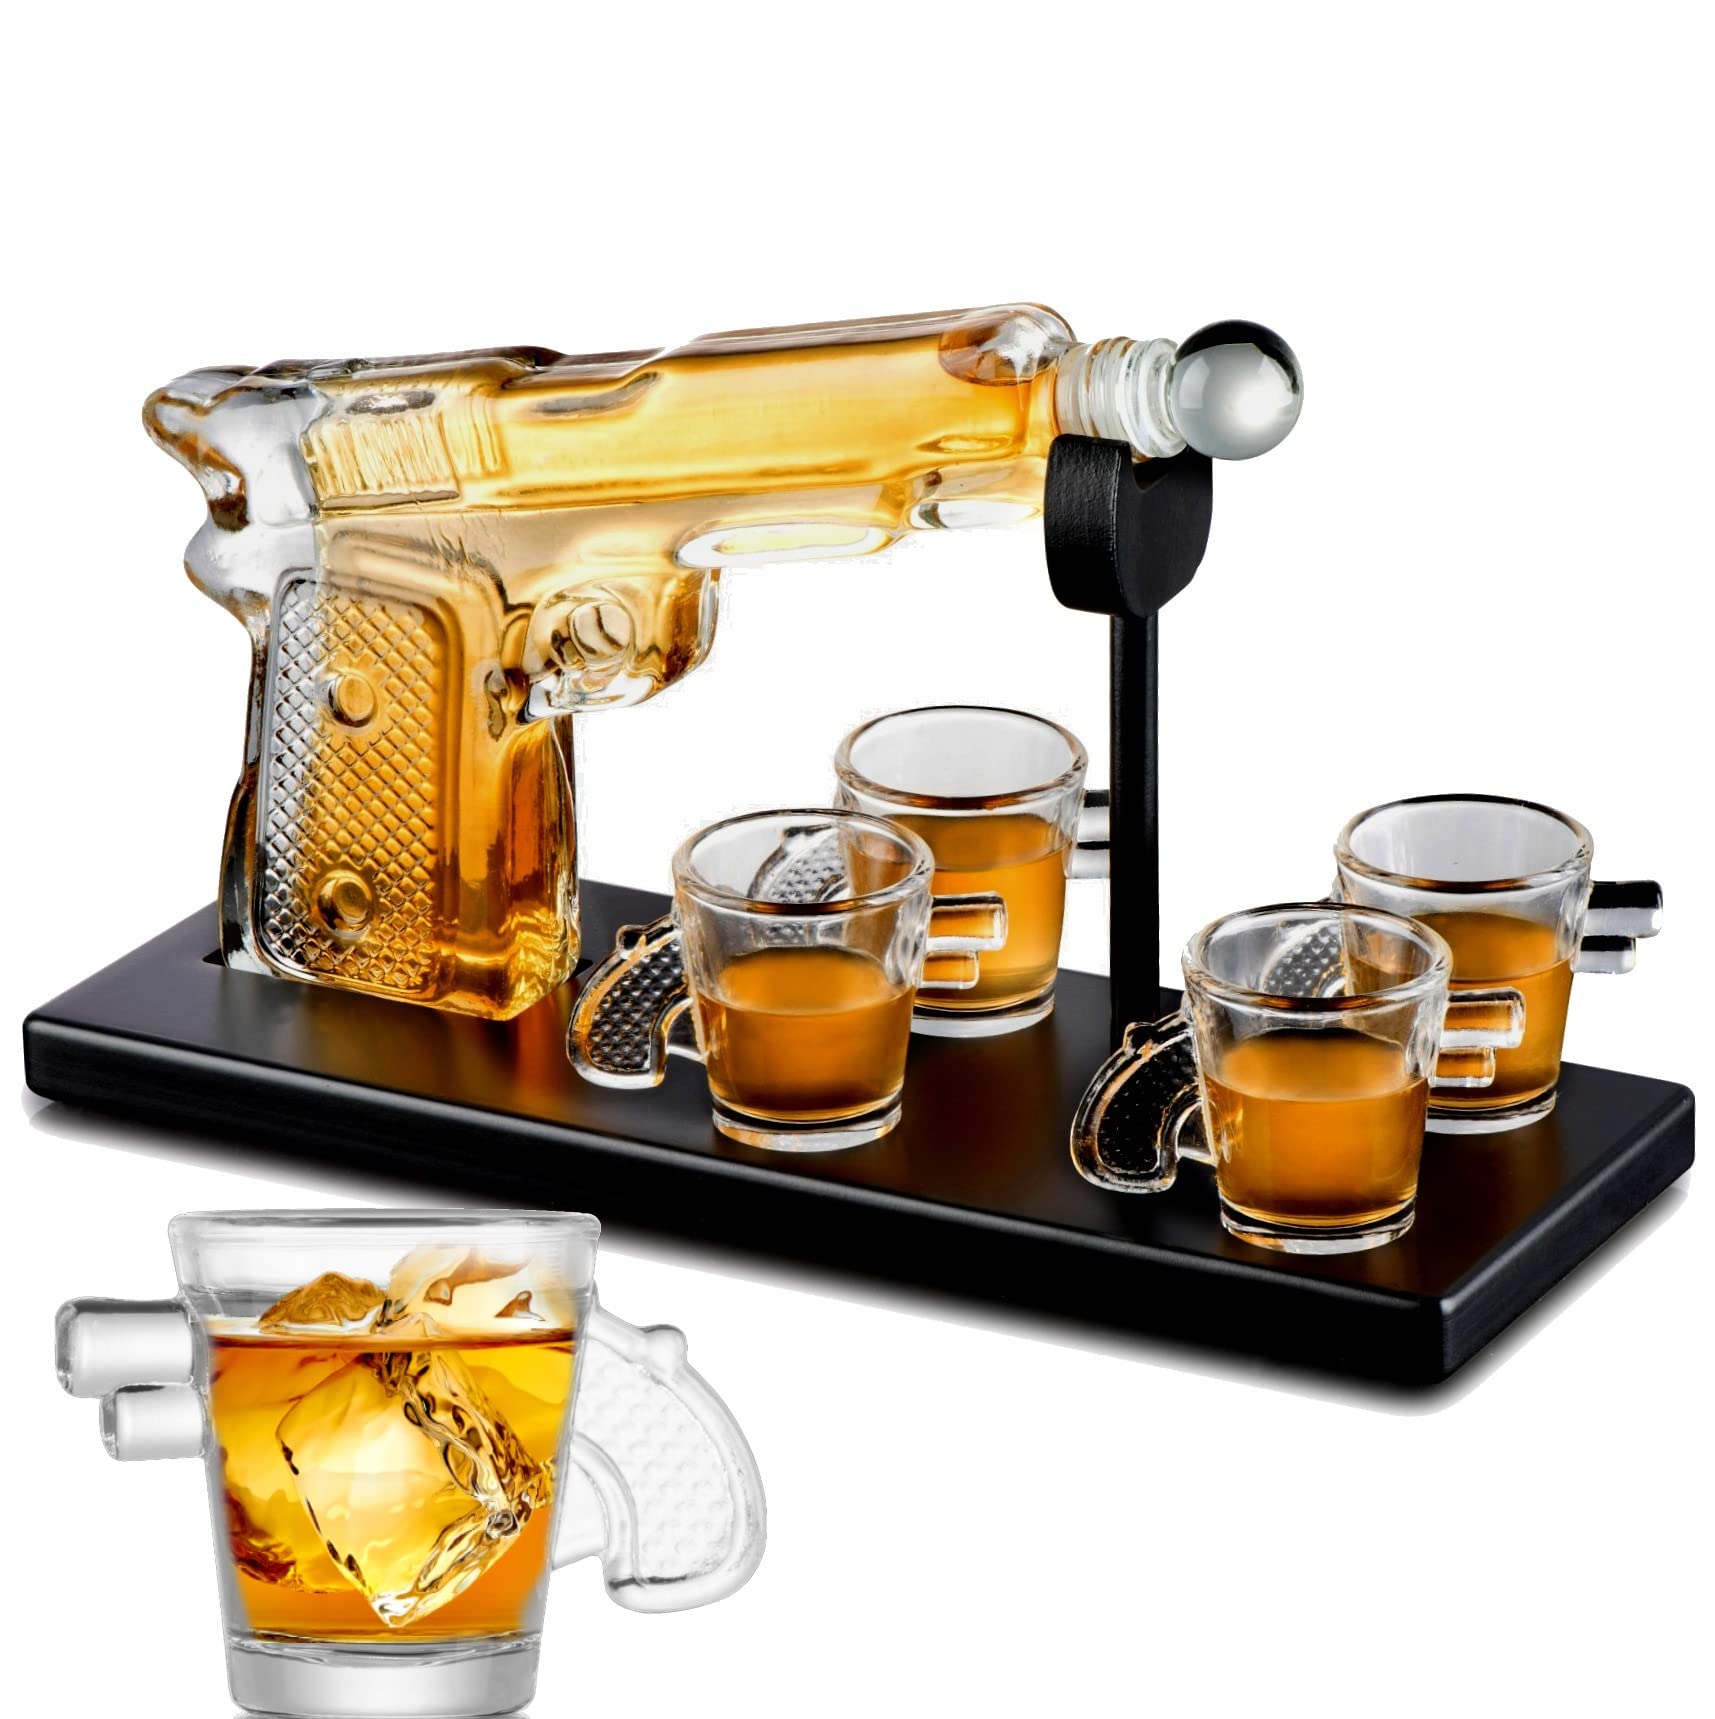 Bezrat Whiskey Gun Decanter Set - Whiskey Gun Decanter with 4 Gun Shaped Shot Glasses on on Mahogany Tray - Old Fashioned Bourbon Liquor Drinks Rocks Glasses Dispenser Set, Whiskey Gift Box